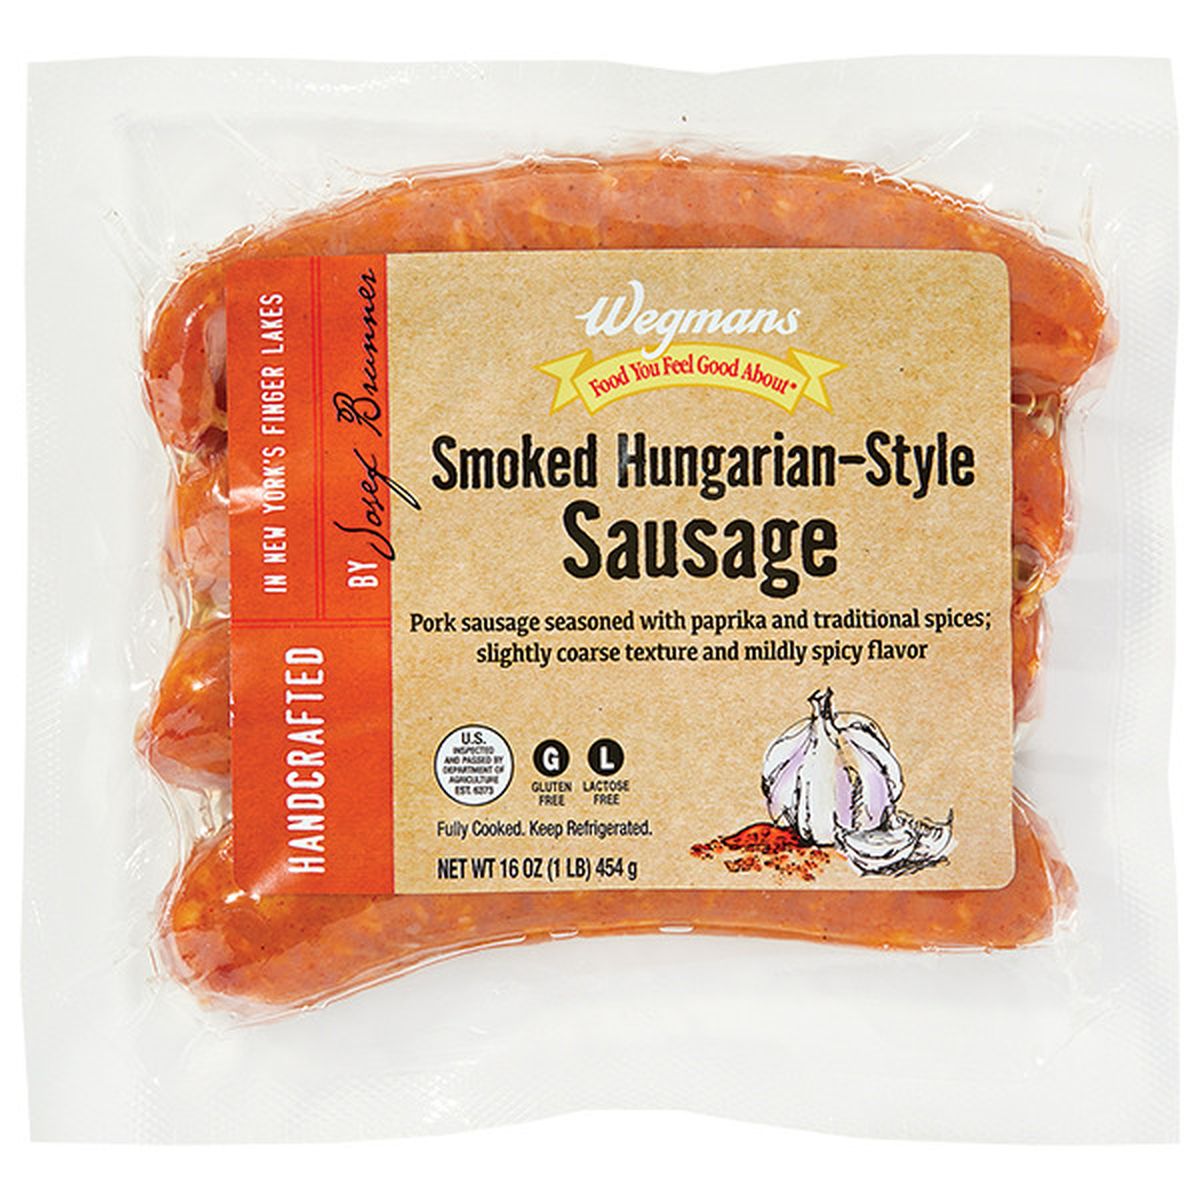 Calories in Wegmans Smoked Hungarian-Style Sausage